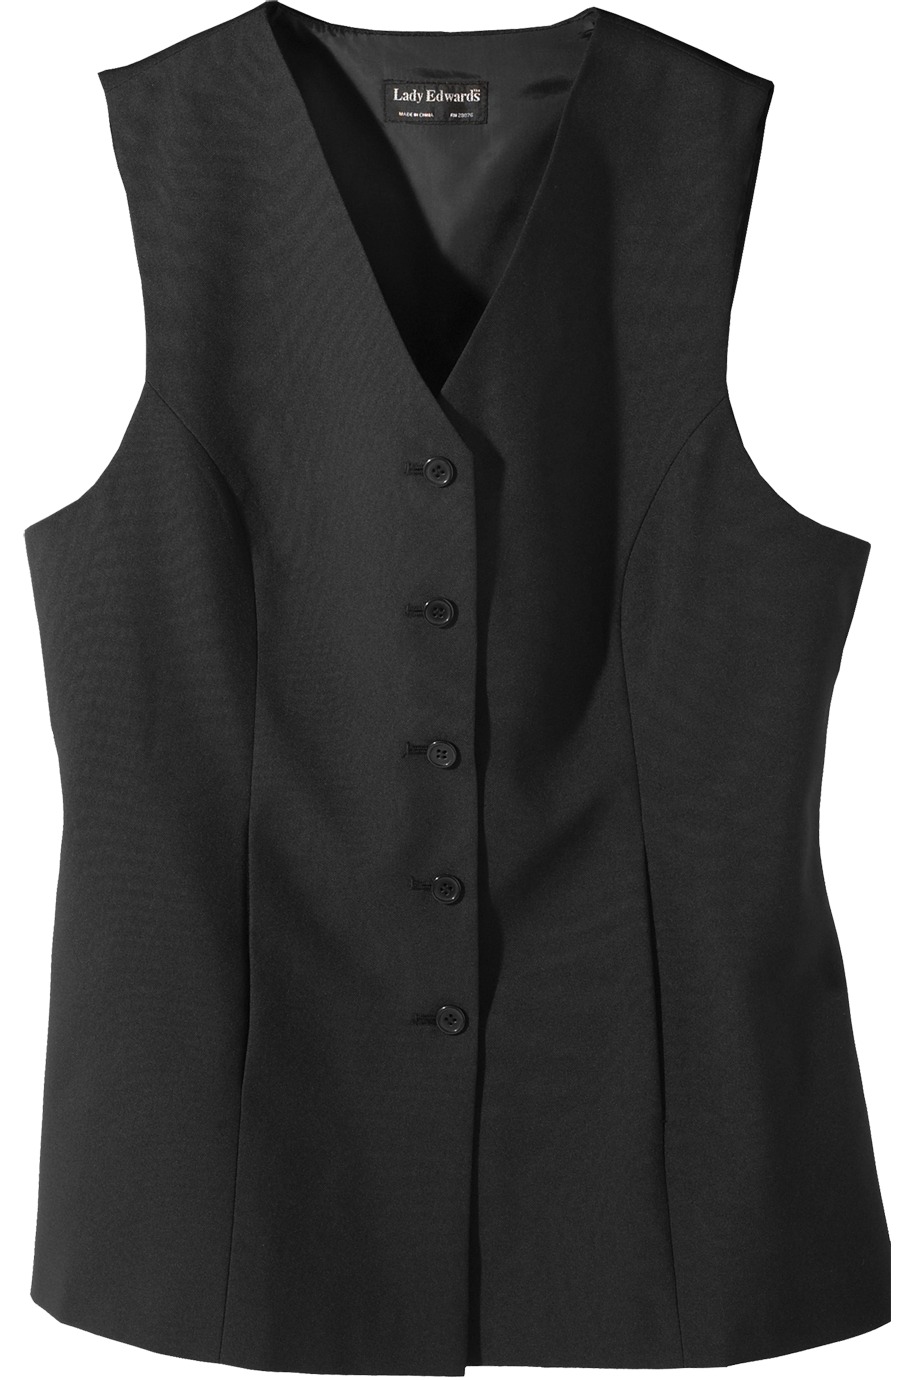 Edwards Garment 7270 - Women's Tunic Vest